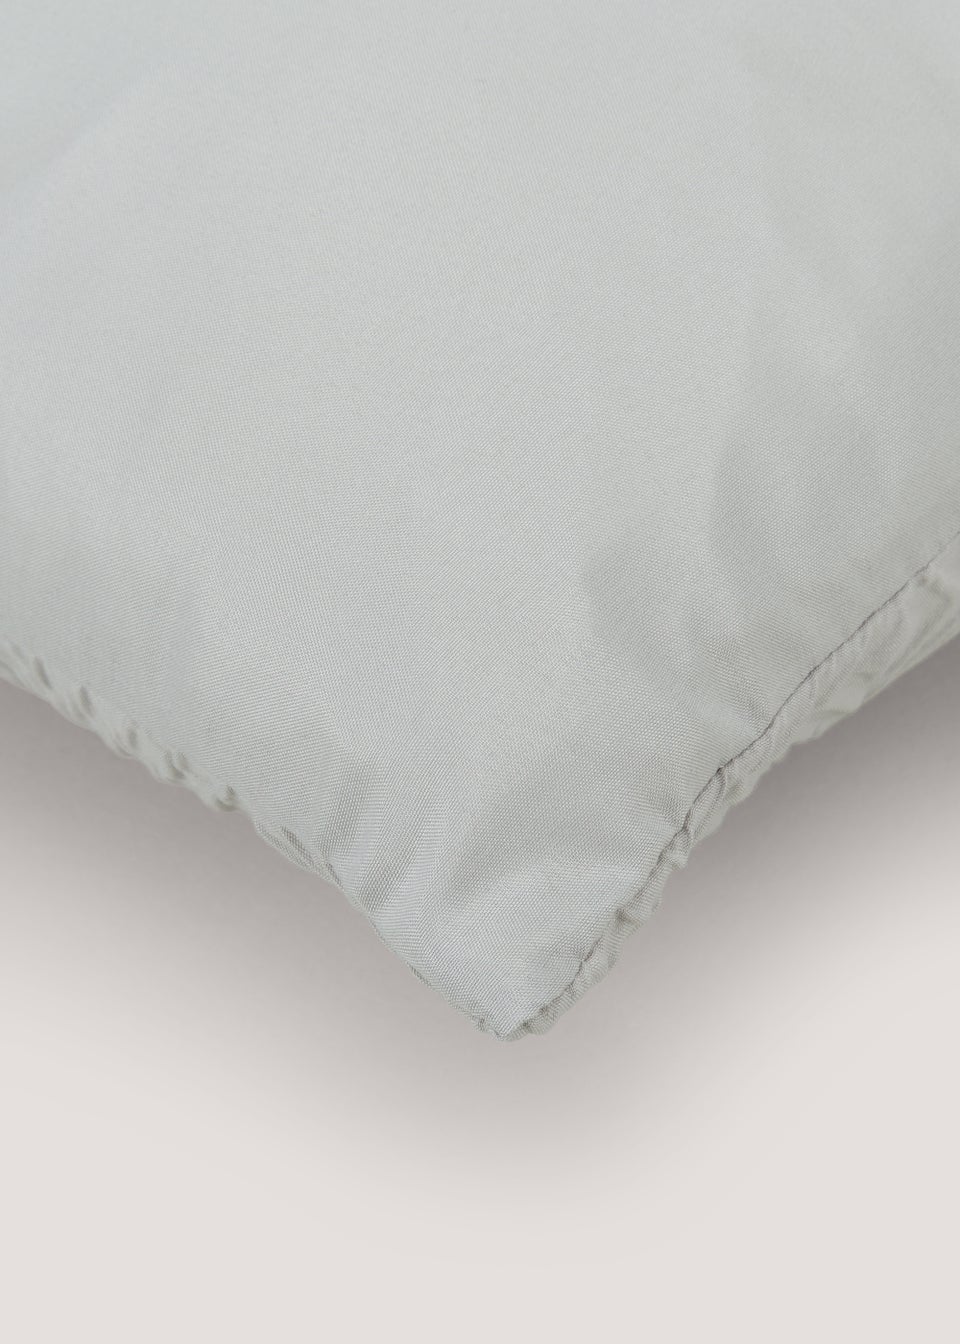 Grey Textured Cushion (40cm x 40cm)